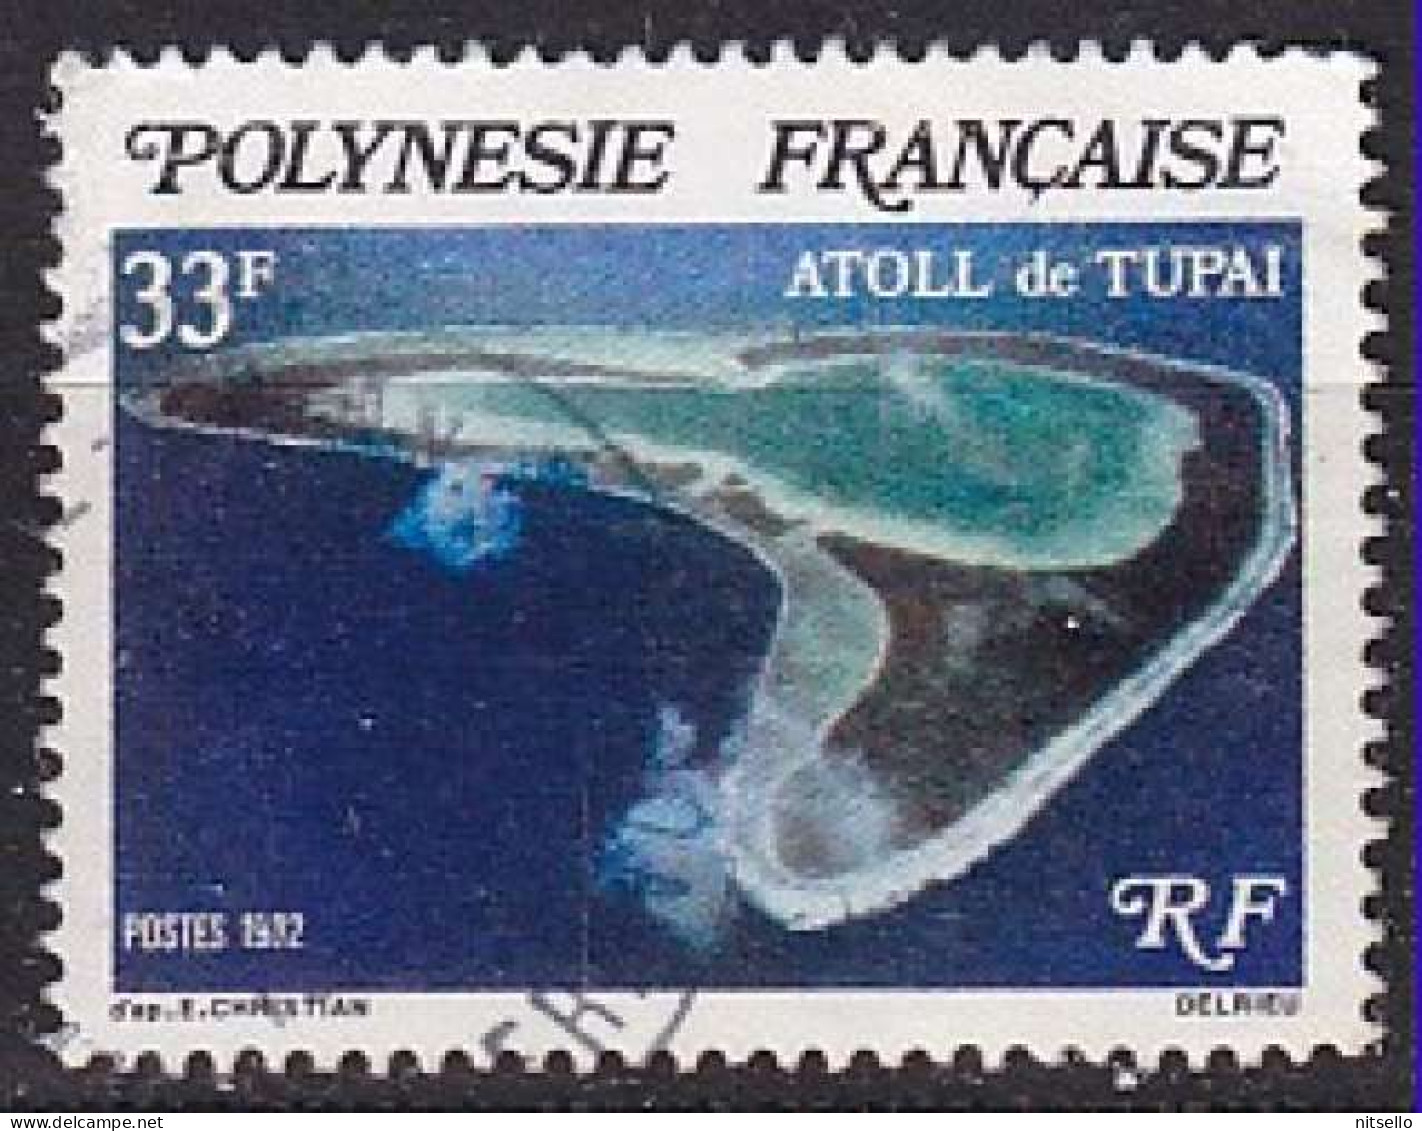 LOTE 2202A ///  (C020)  POLINESIA FRANCESA  - YVERT Nº:187   ¡¡¡ OFERTA - LIQUIDATION - JE LIQUIDE !!! - Used Stamps